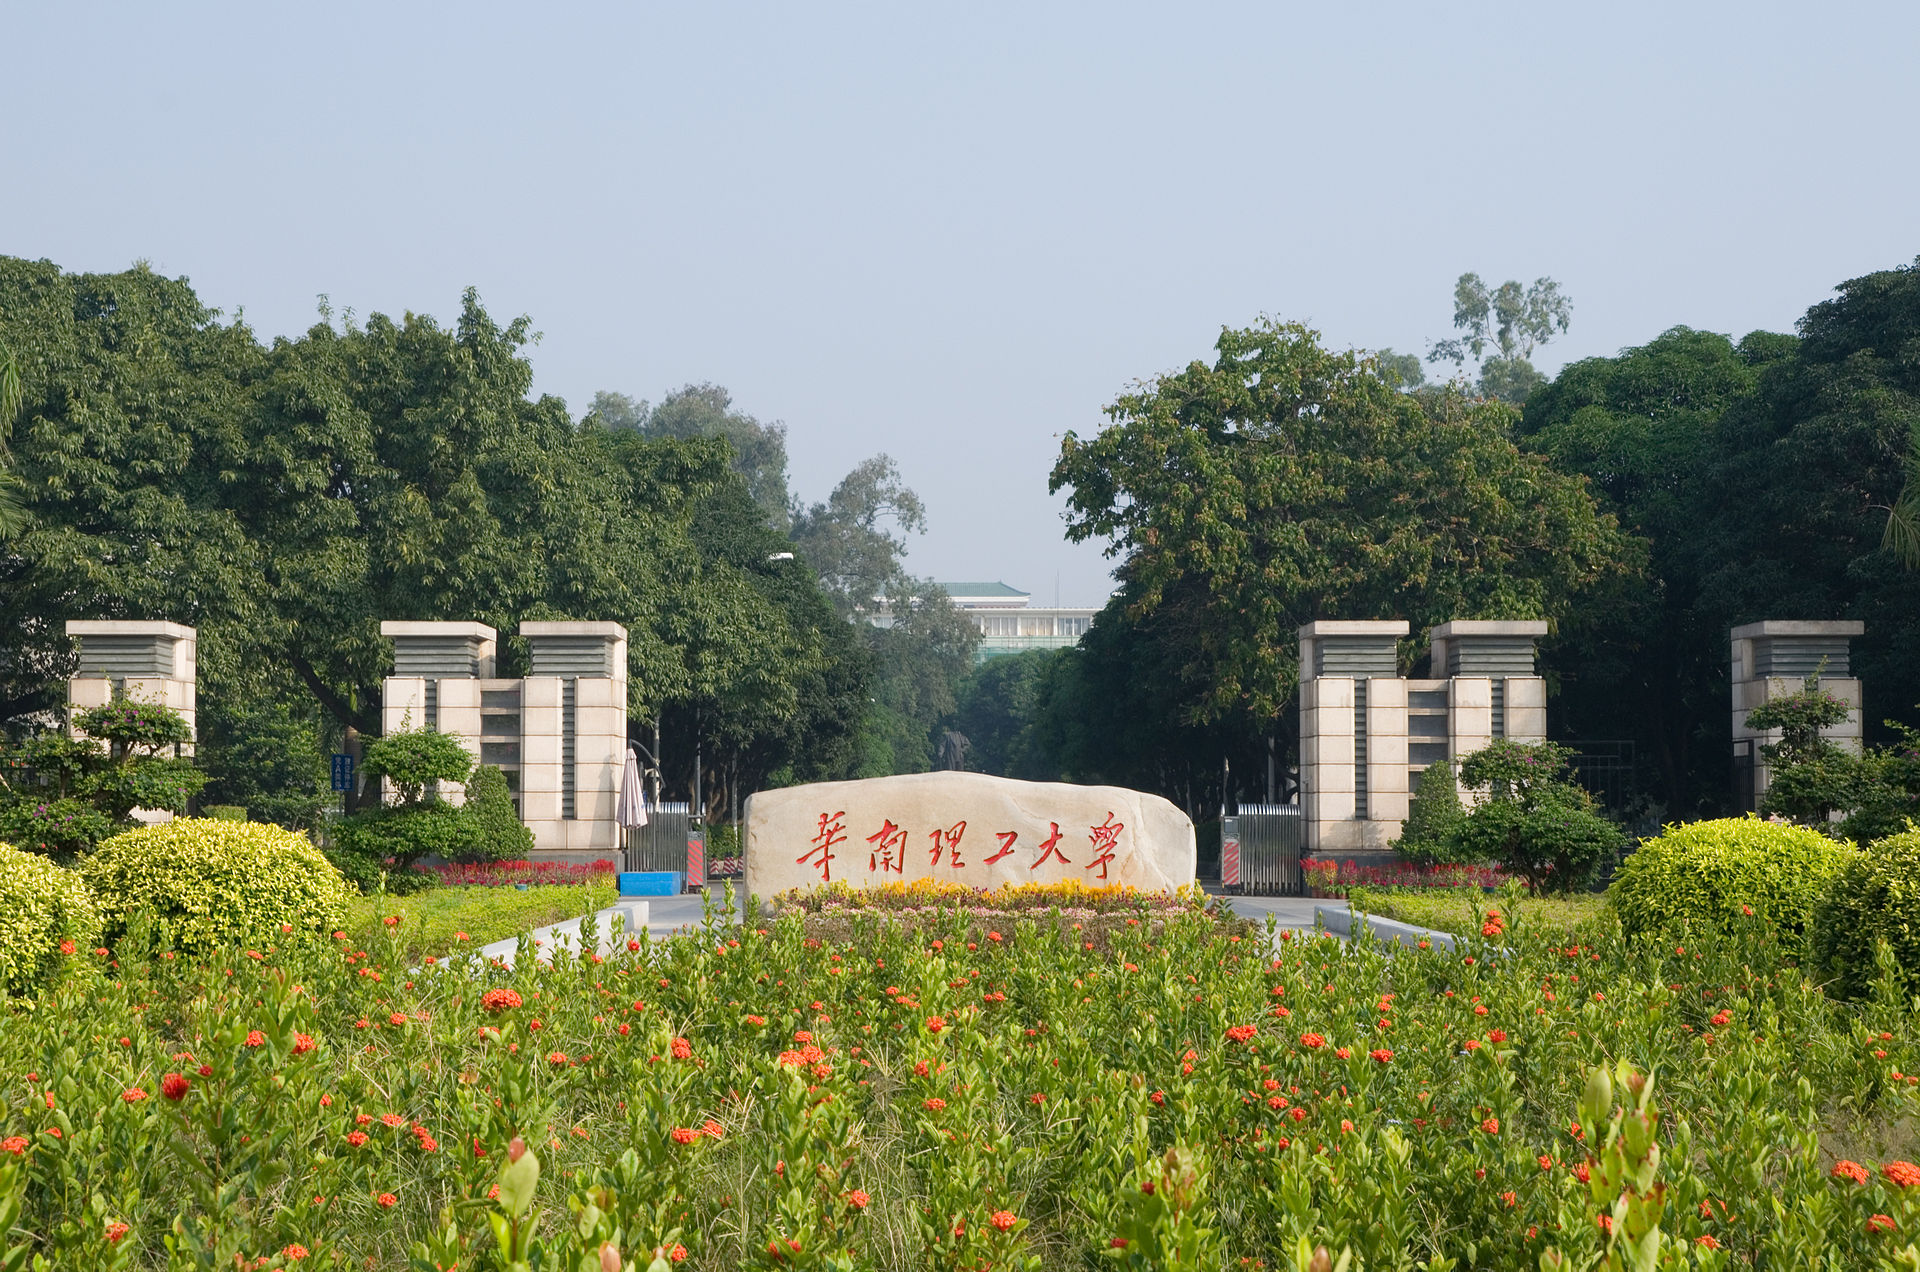 1920px-South_China_University_of_Technology_South_Gate.jpg